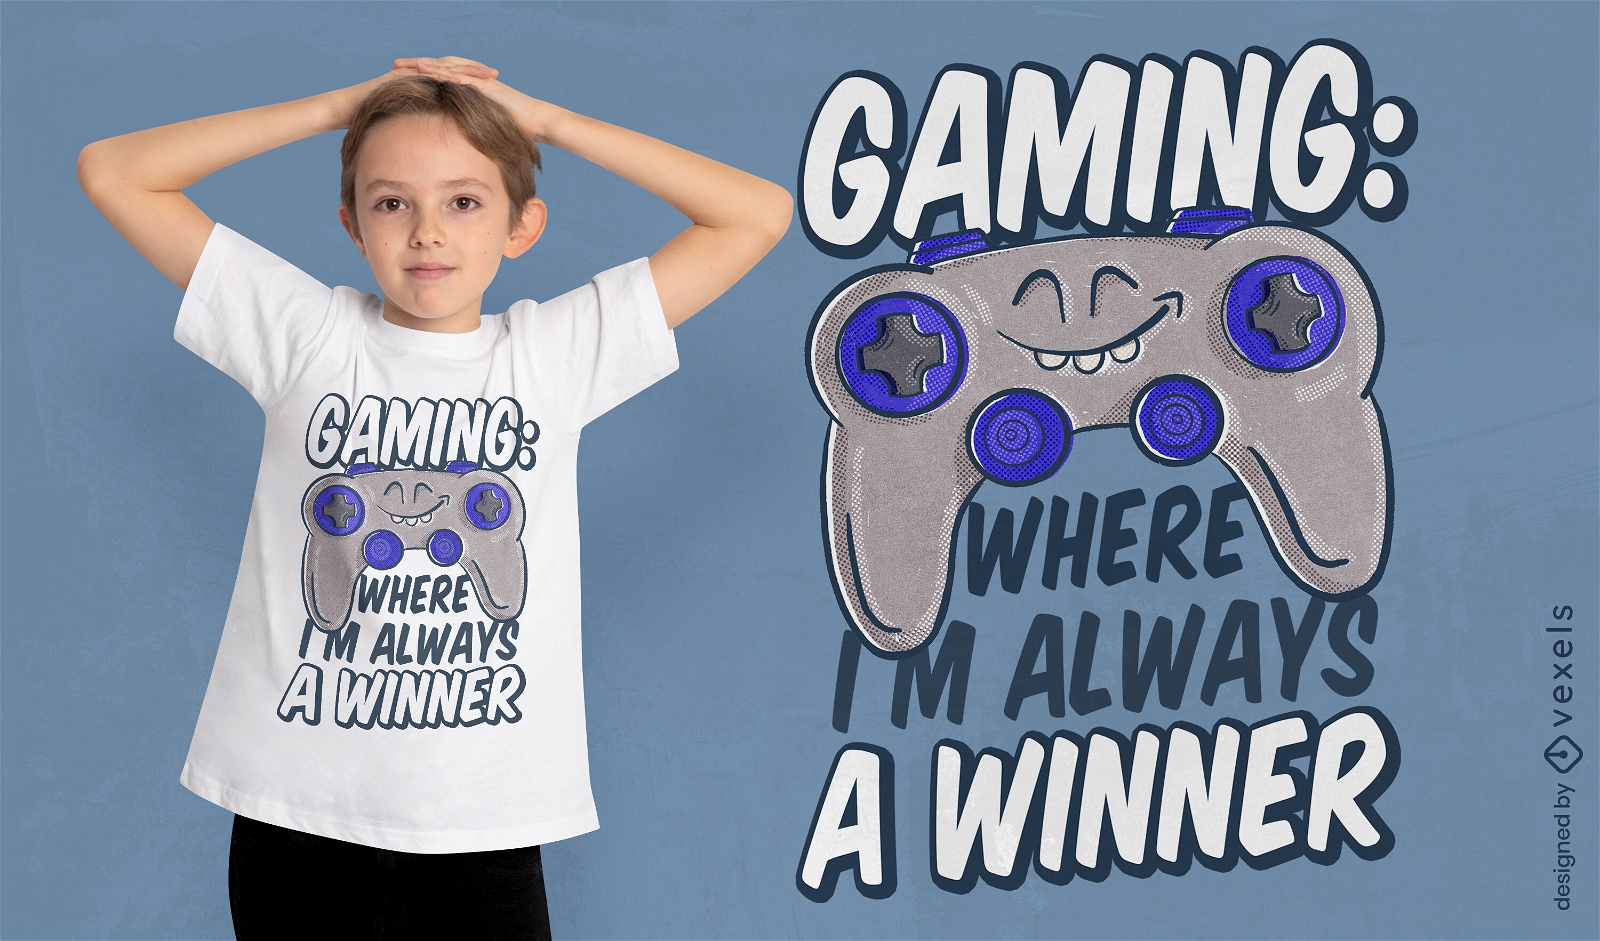 Champion gamer t-shirt design